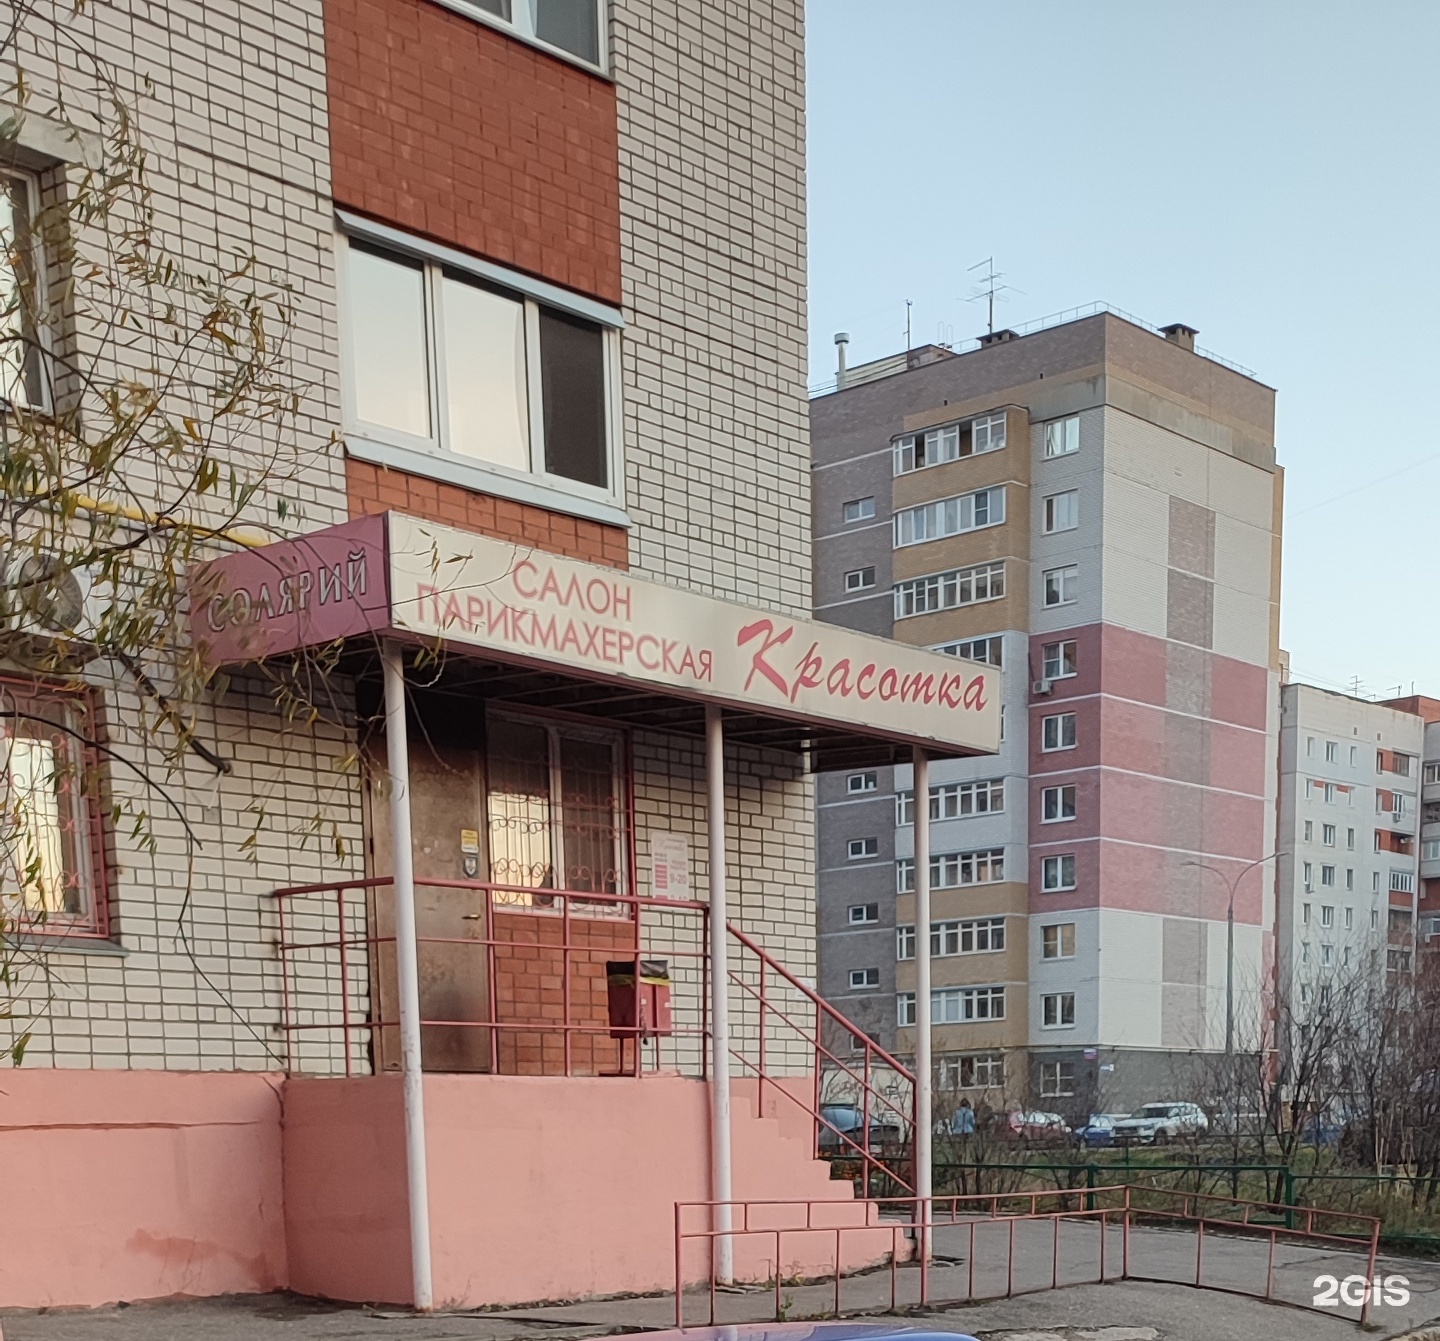 Магазин Красотка Нижний Новгород